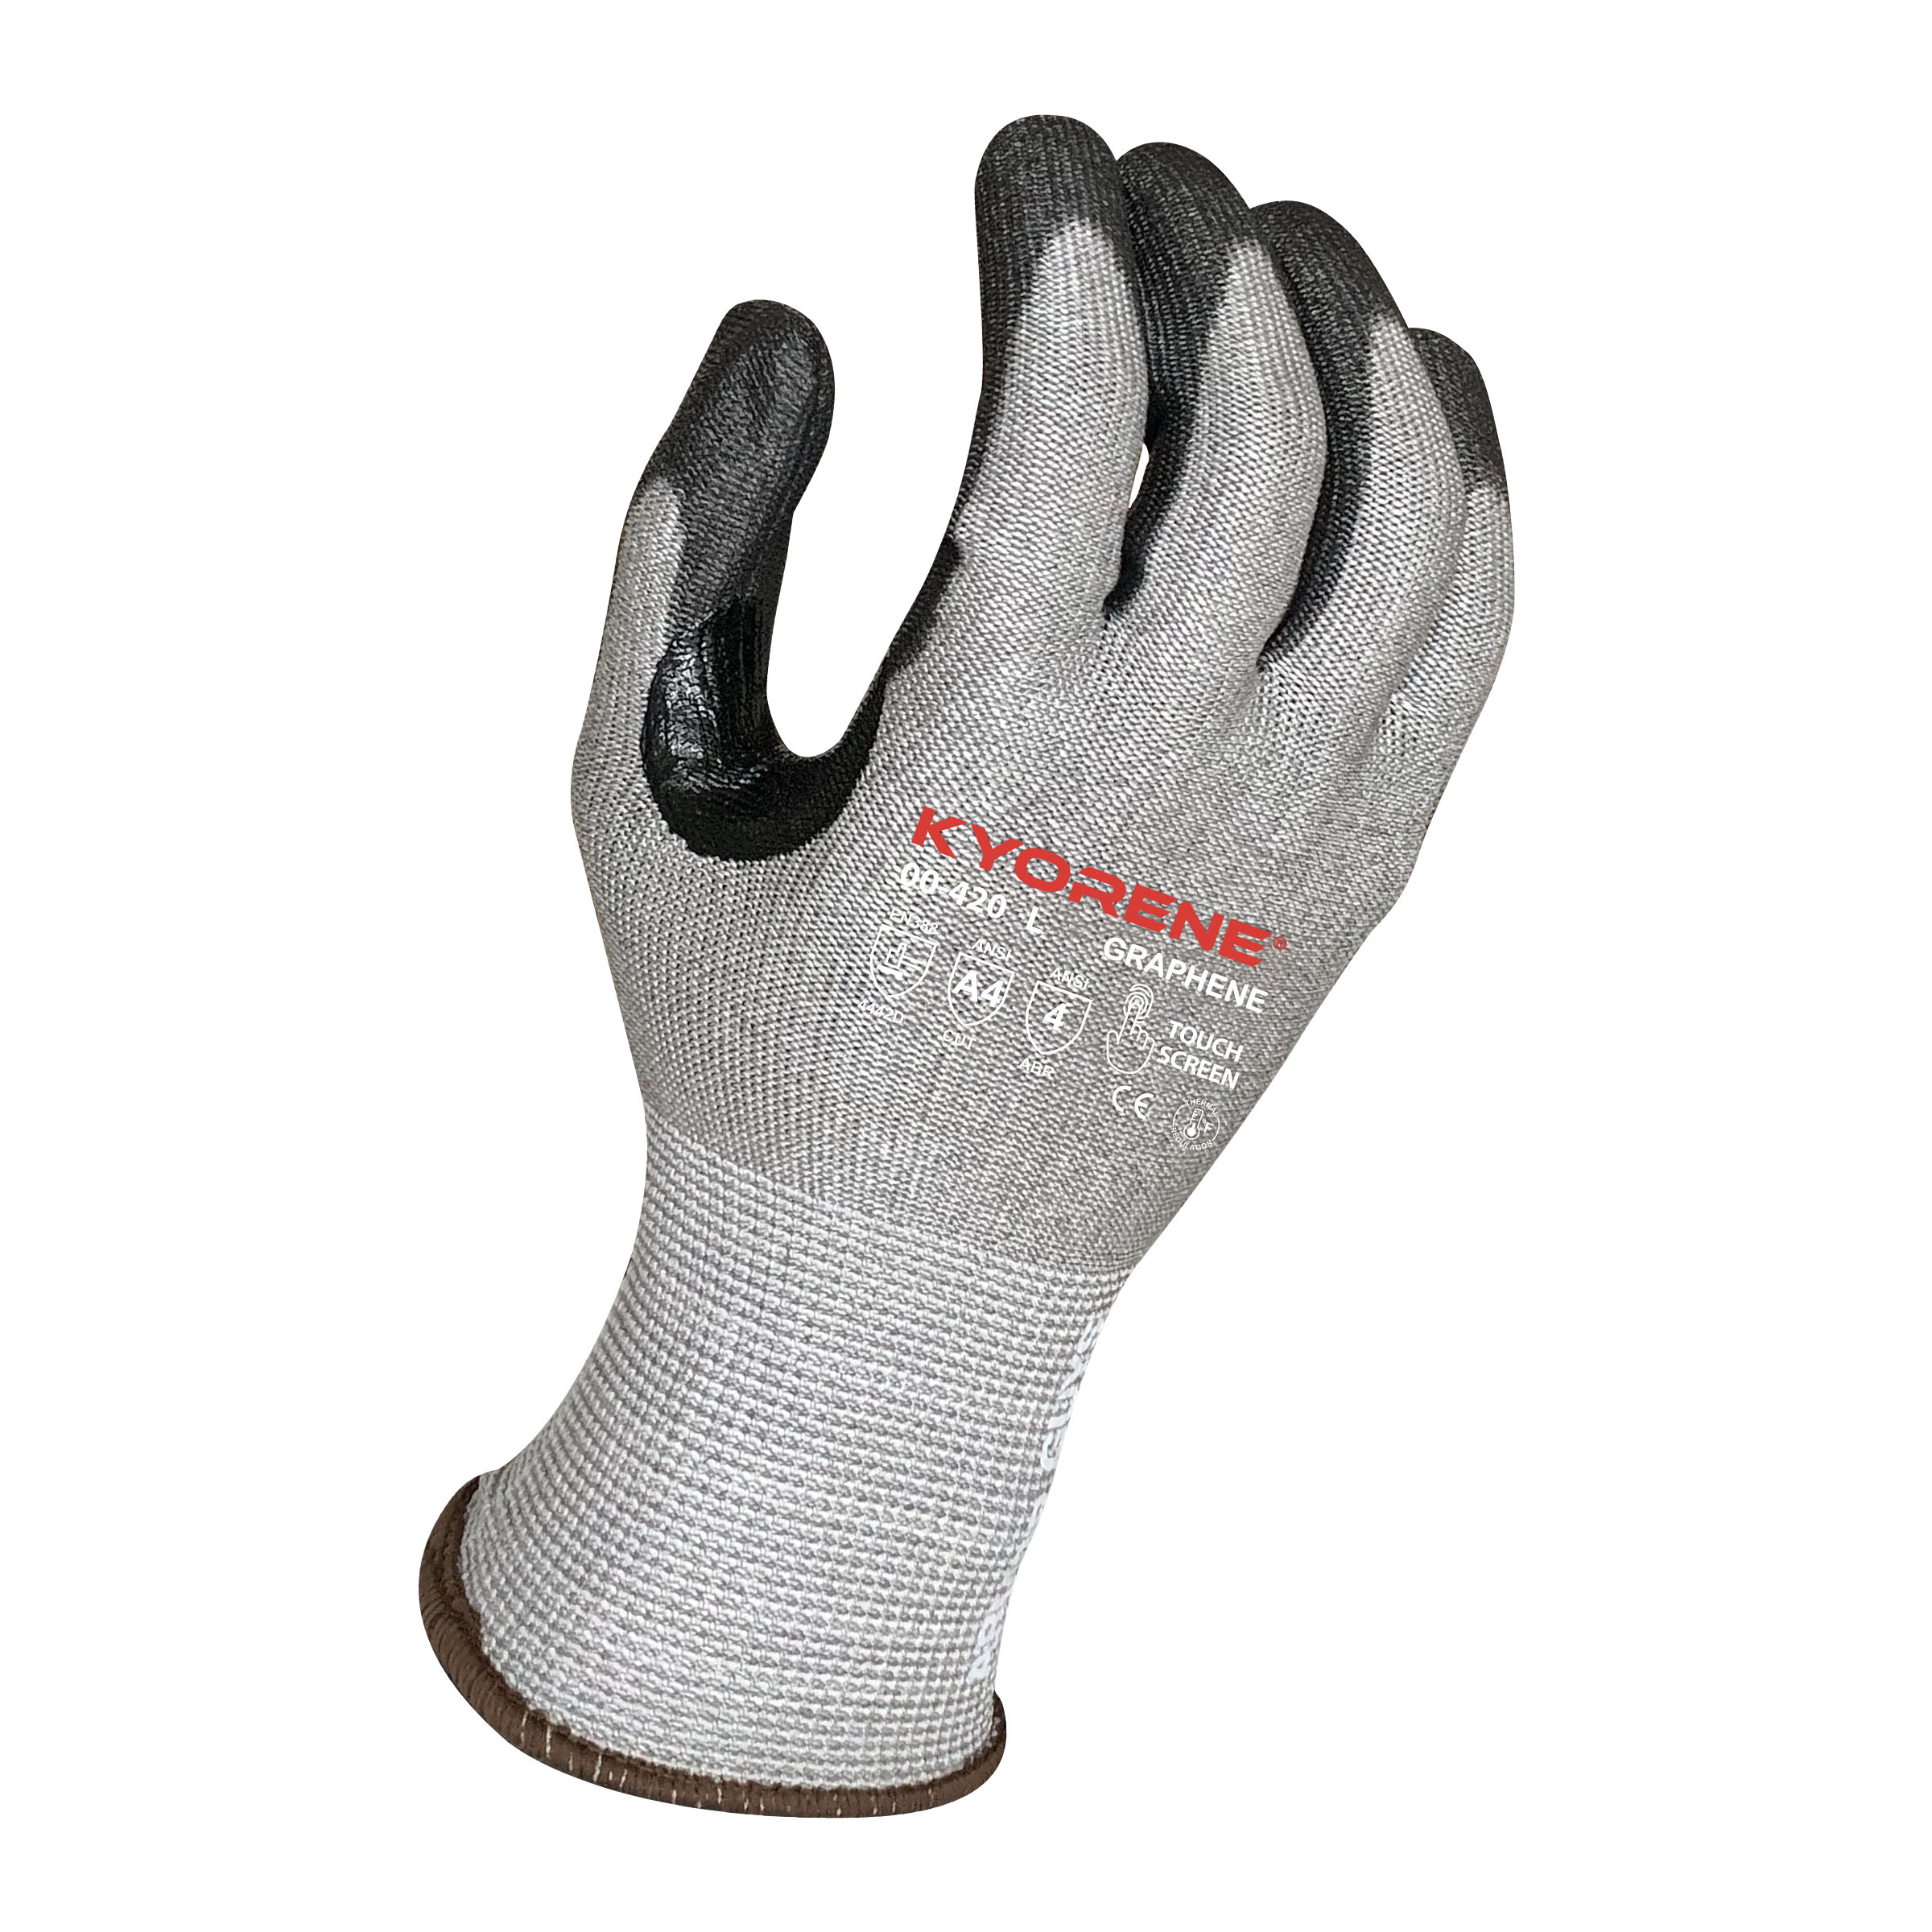 CellBlock High Heat Gloves - Large/Xlarge